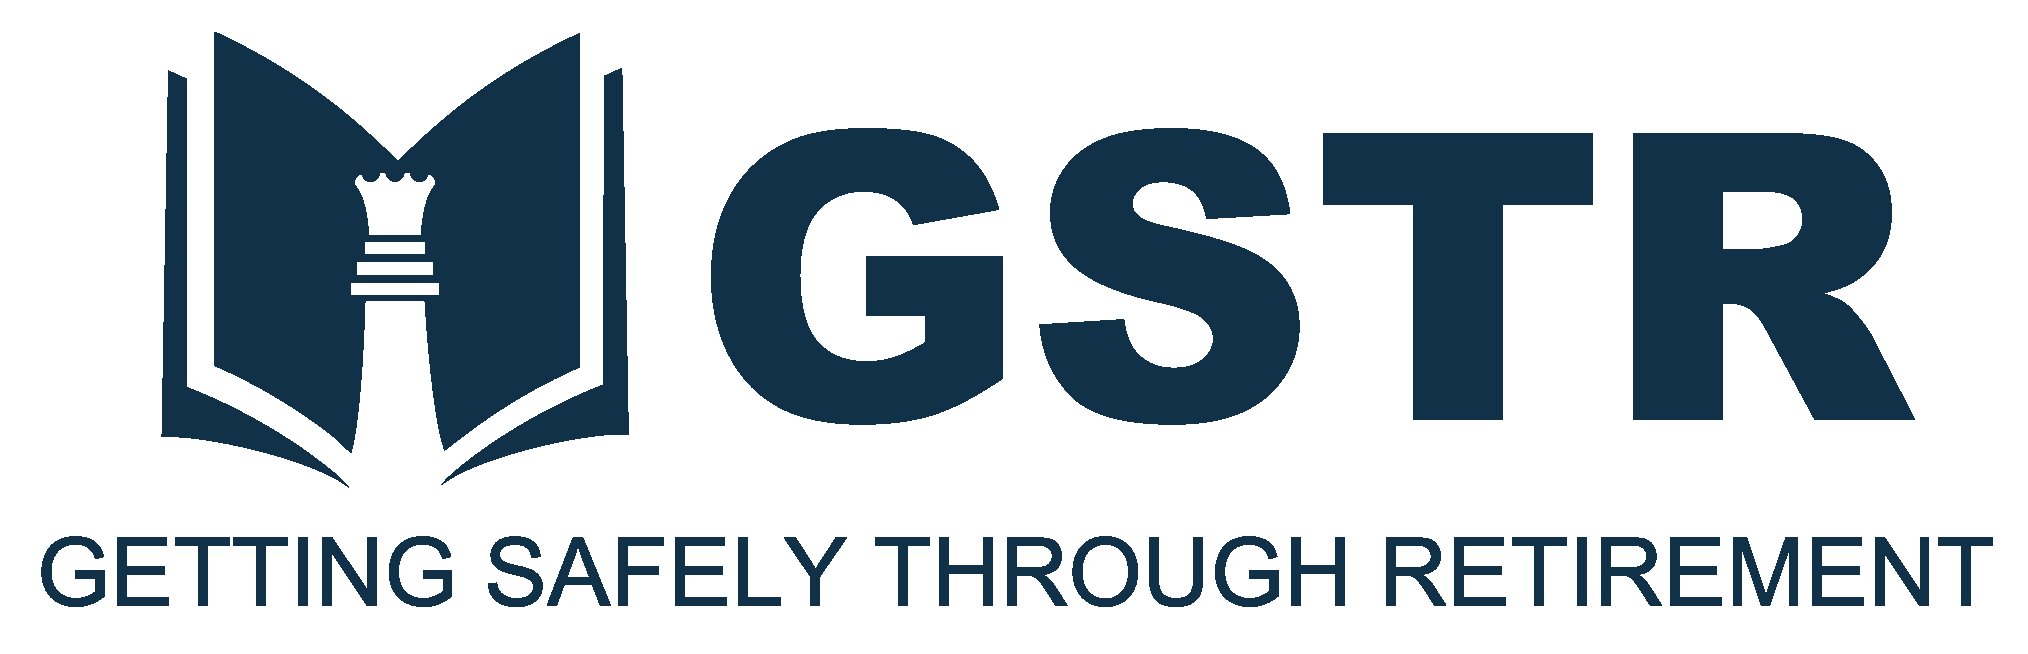 GSTRbook_logo-1-1-1-1.webp